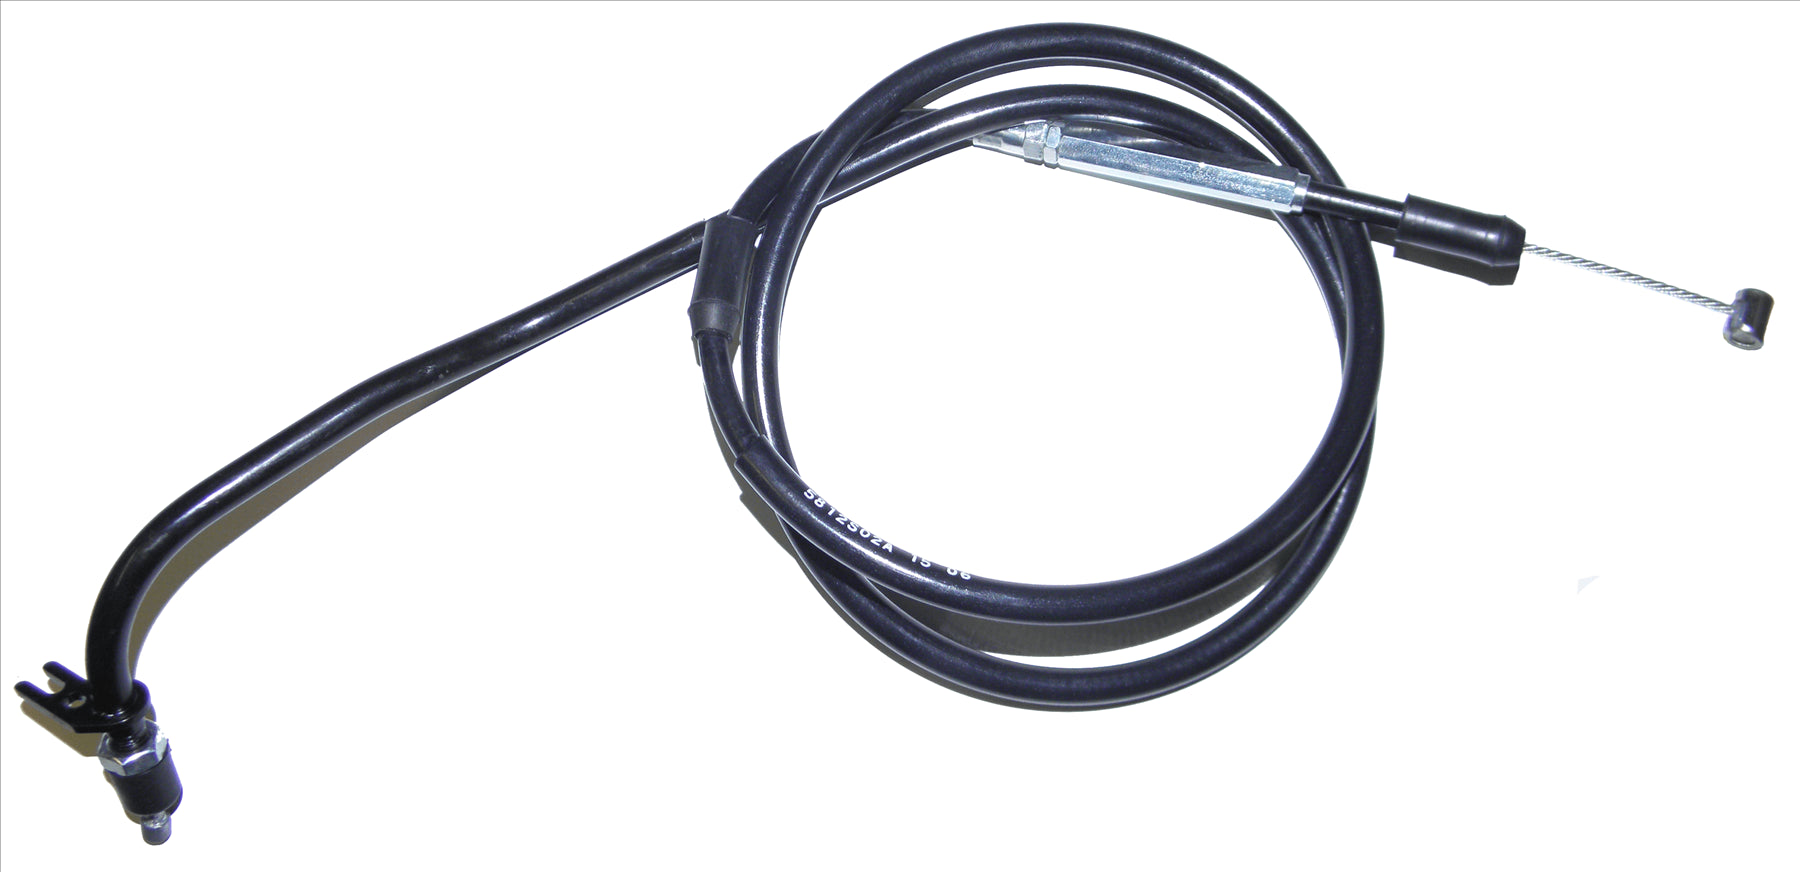 Apico Black Clutch Cable For Honda CRF 250R 2010-2013